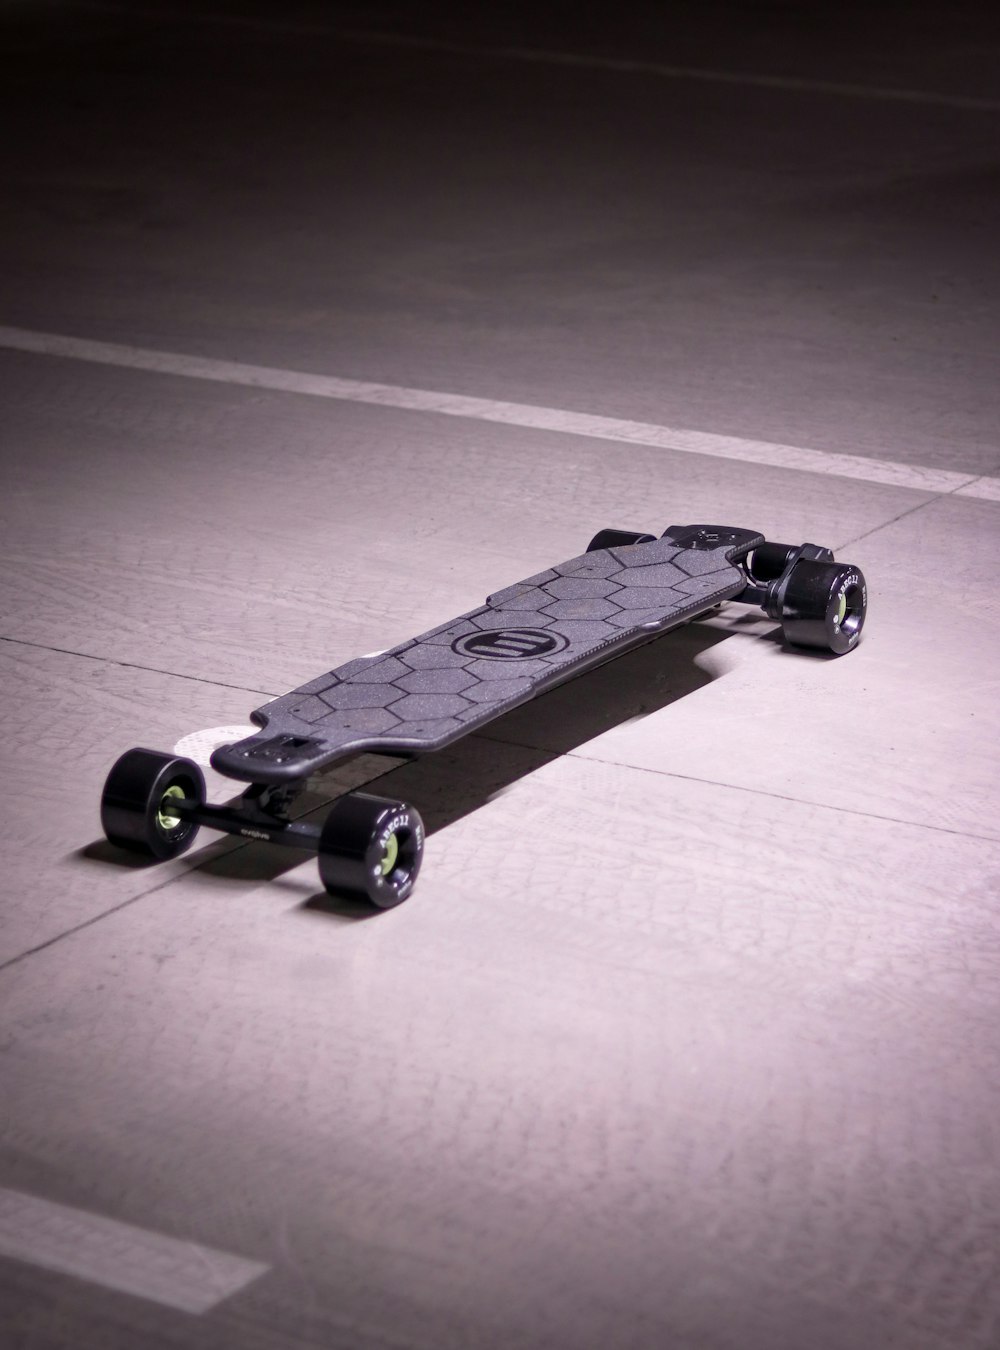 a skateboard on the ground